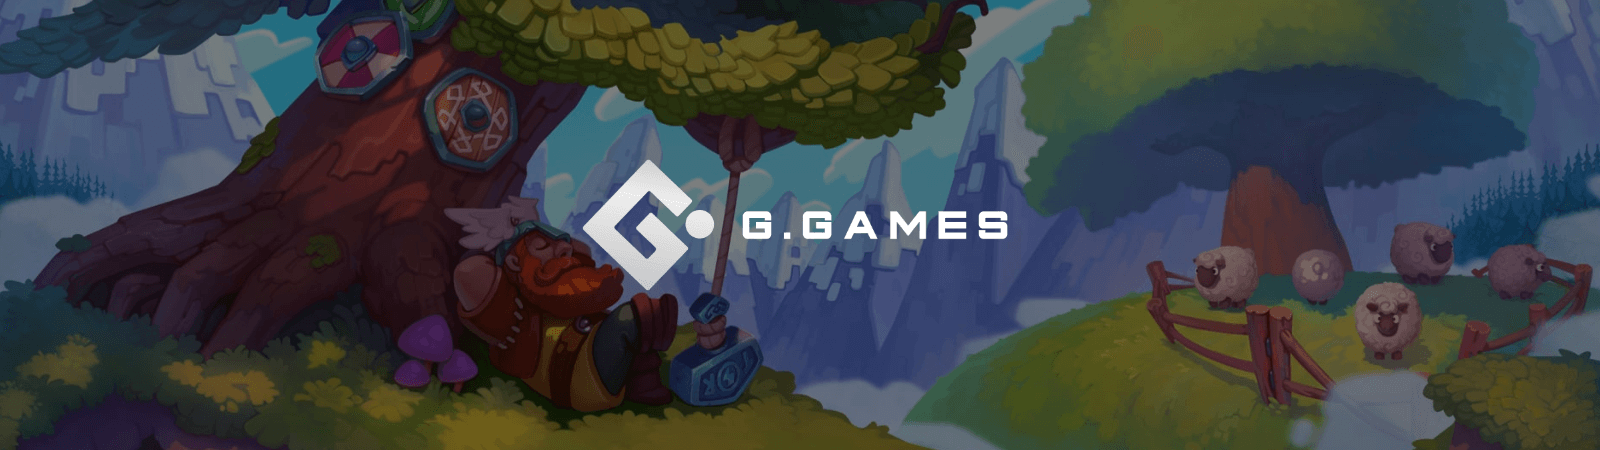 g games banner